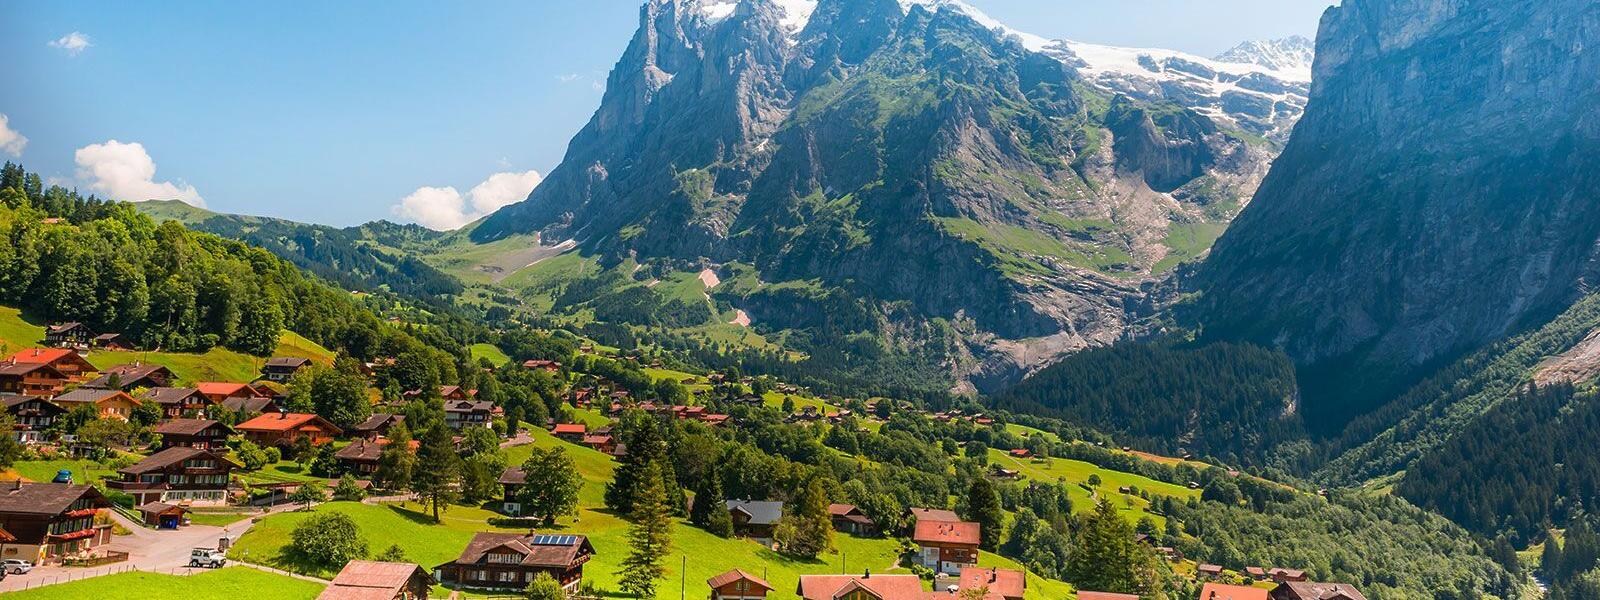 Samnaun – Bergbahnen im Sommer inklusive - e-domizil